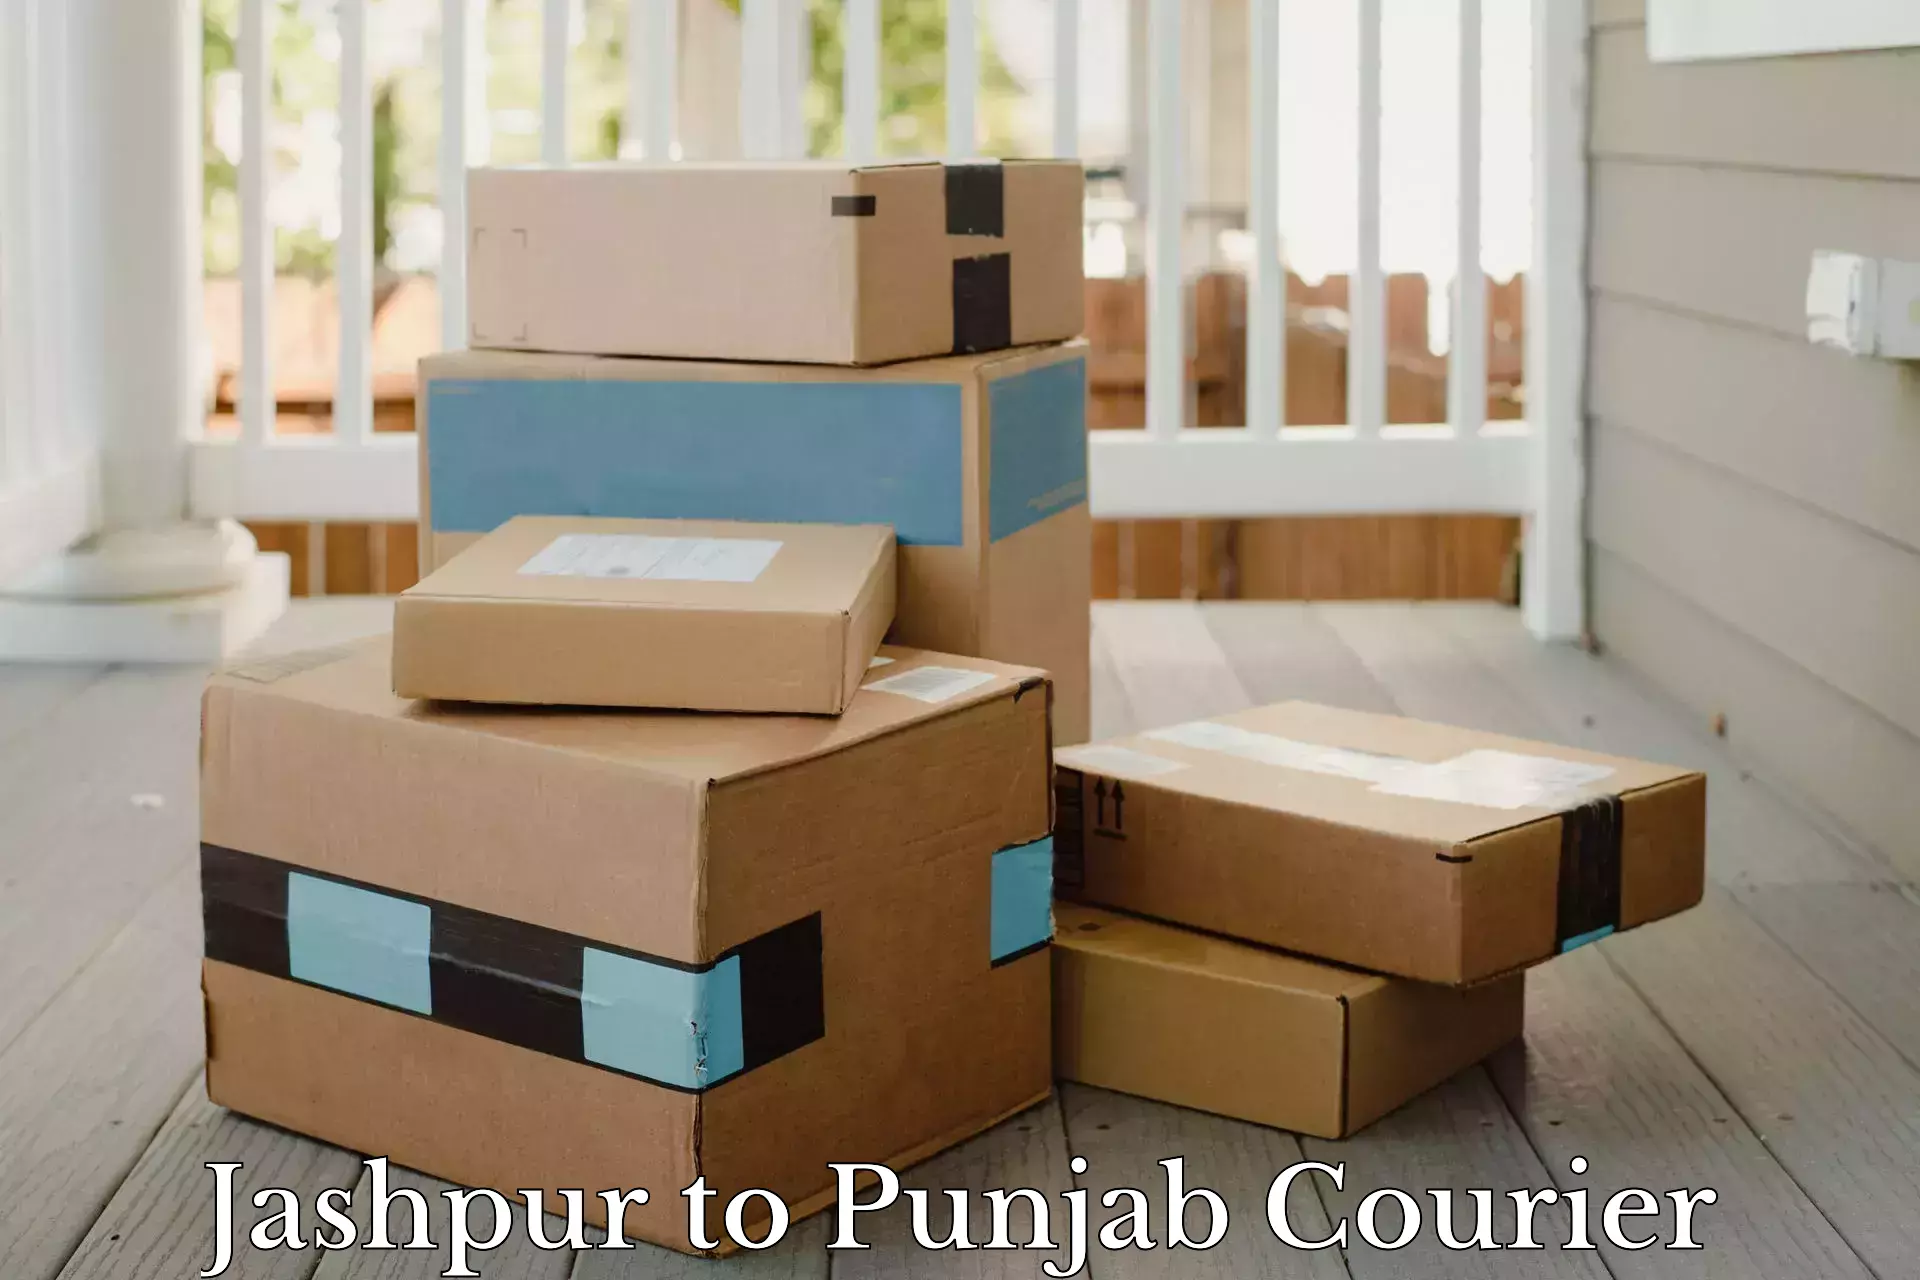 Sustainable courier practices Jashpur to Punjab